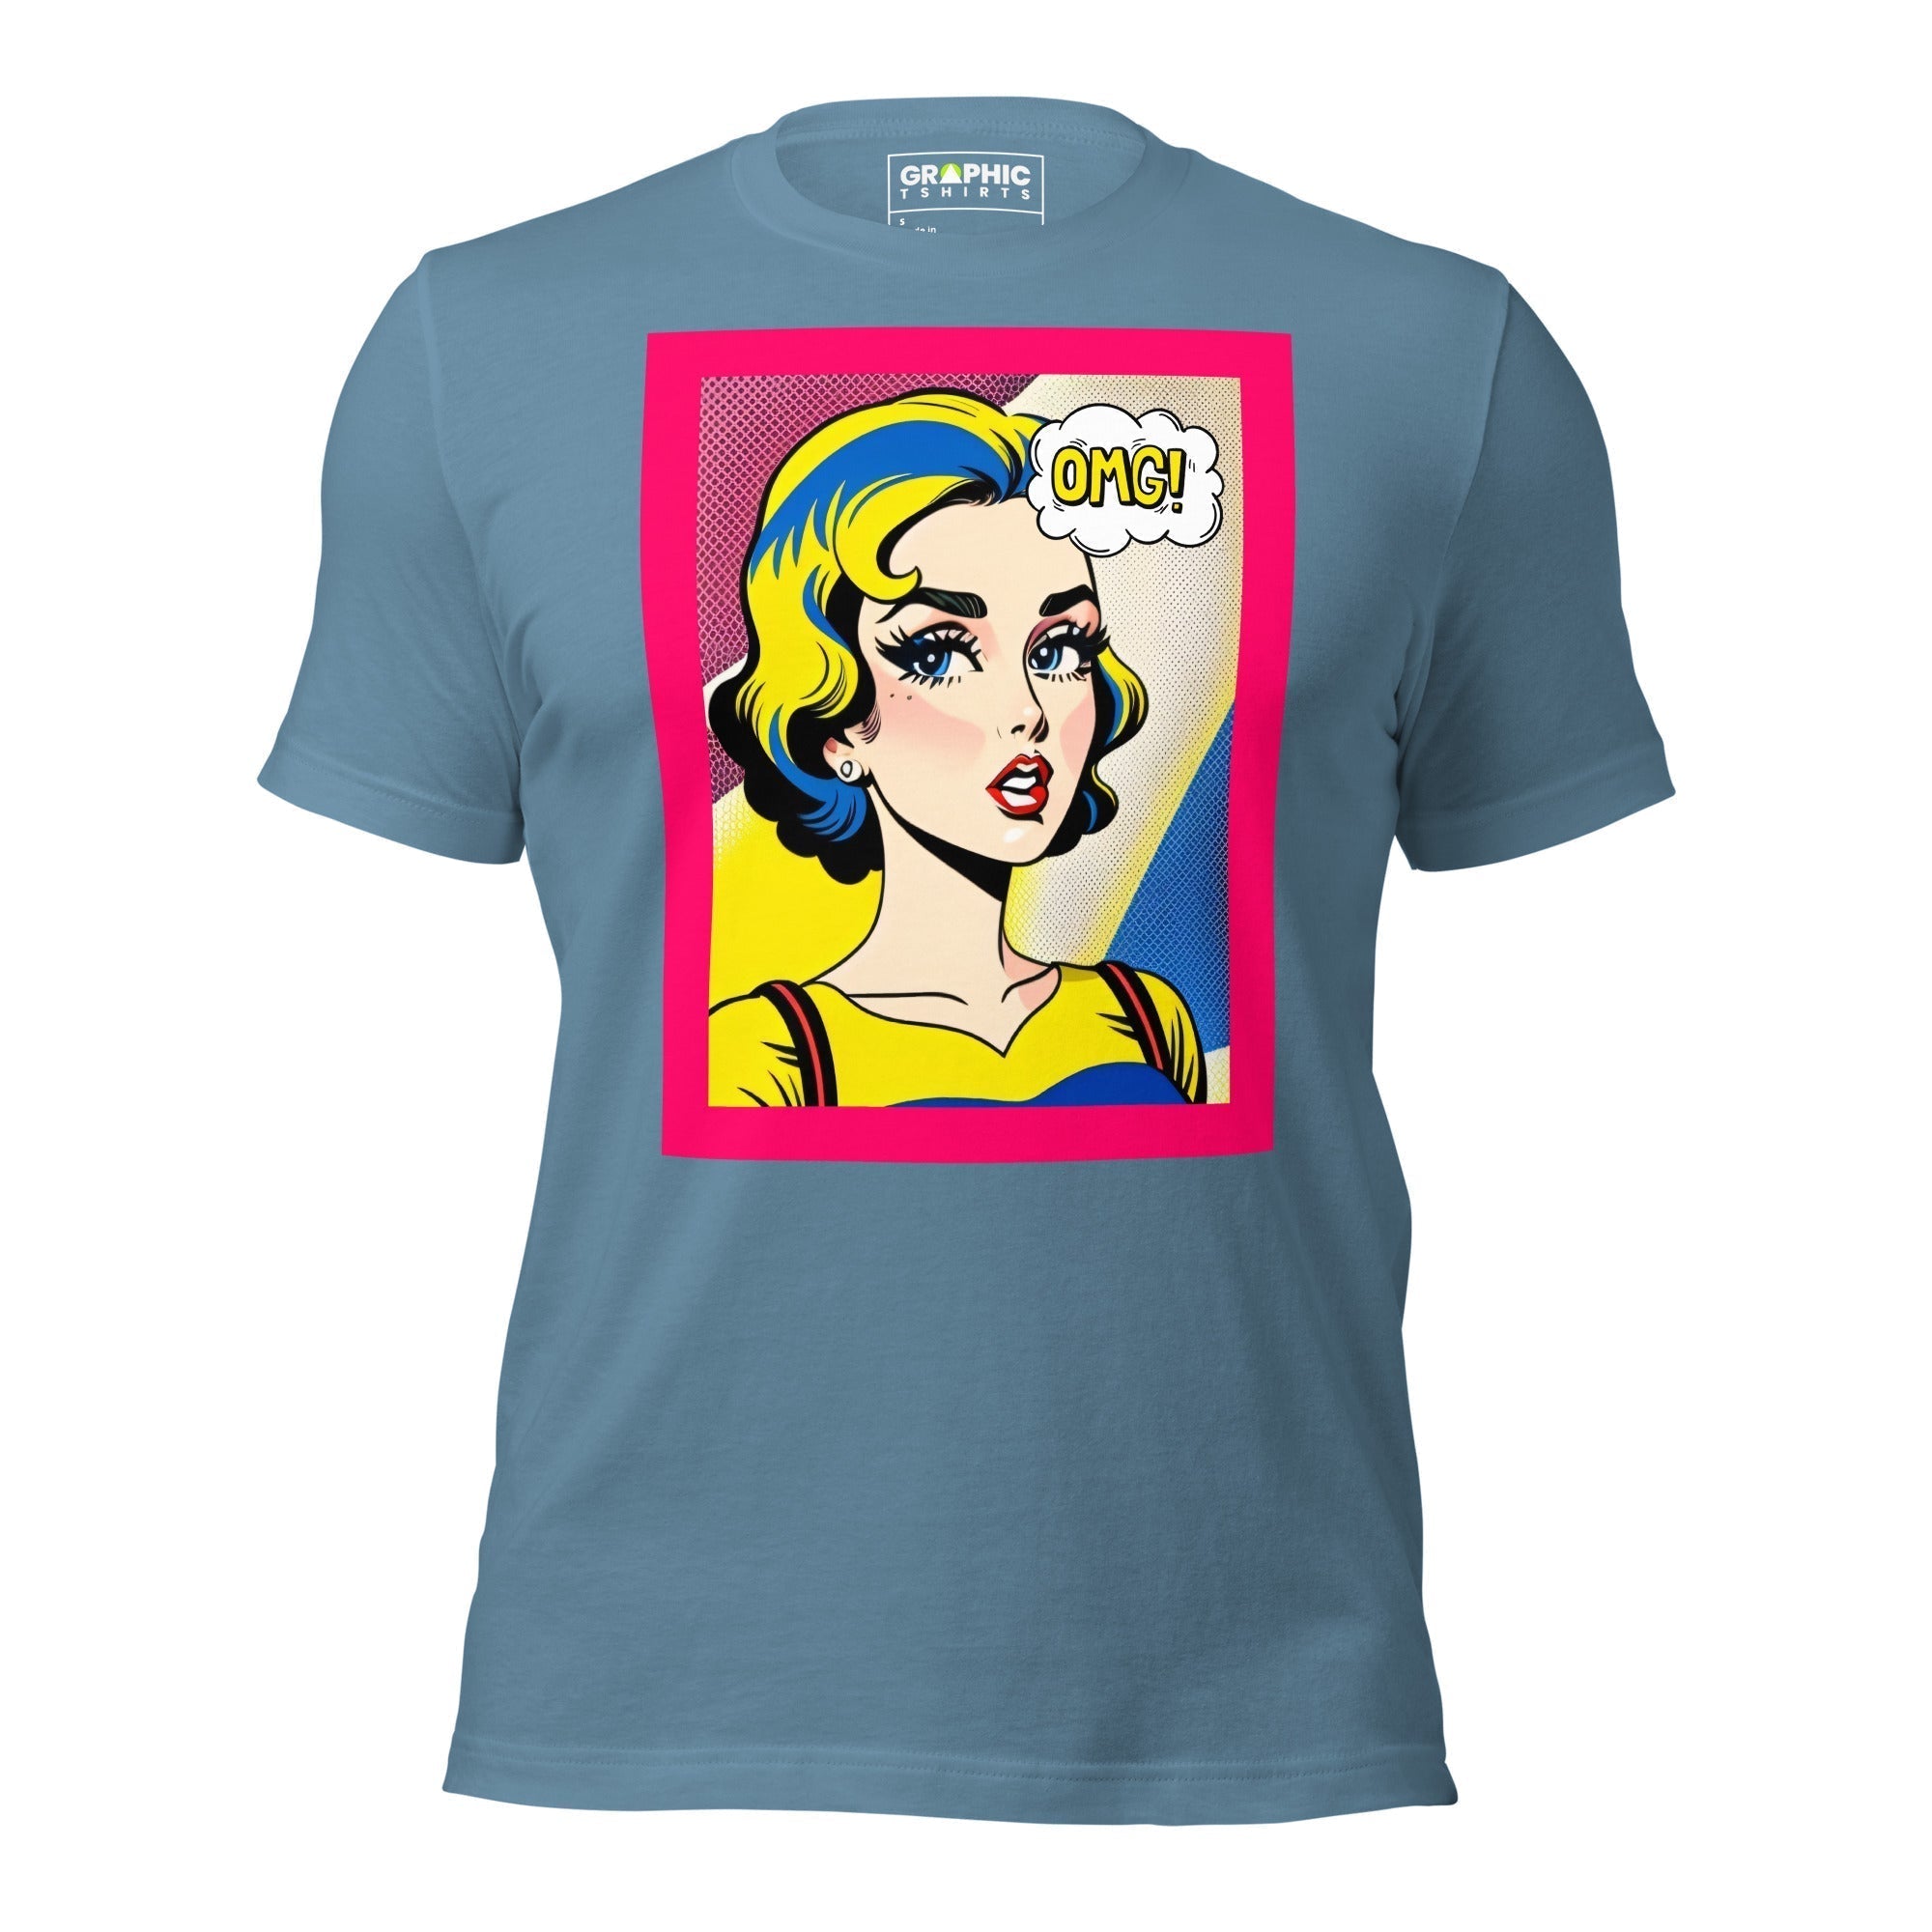 Unisex Crew Neck T-Shirt - Vintage American Comic Series v.26 - GRAPHIC T-SHIRTS